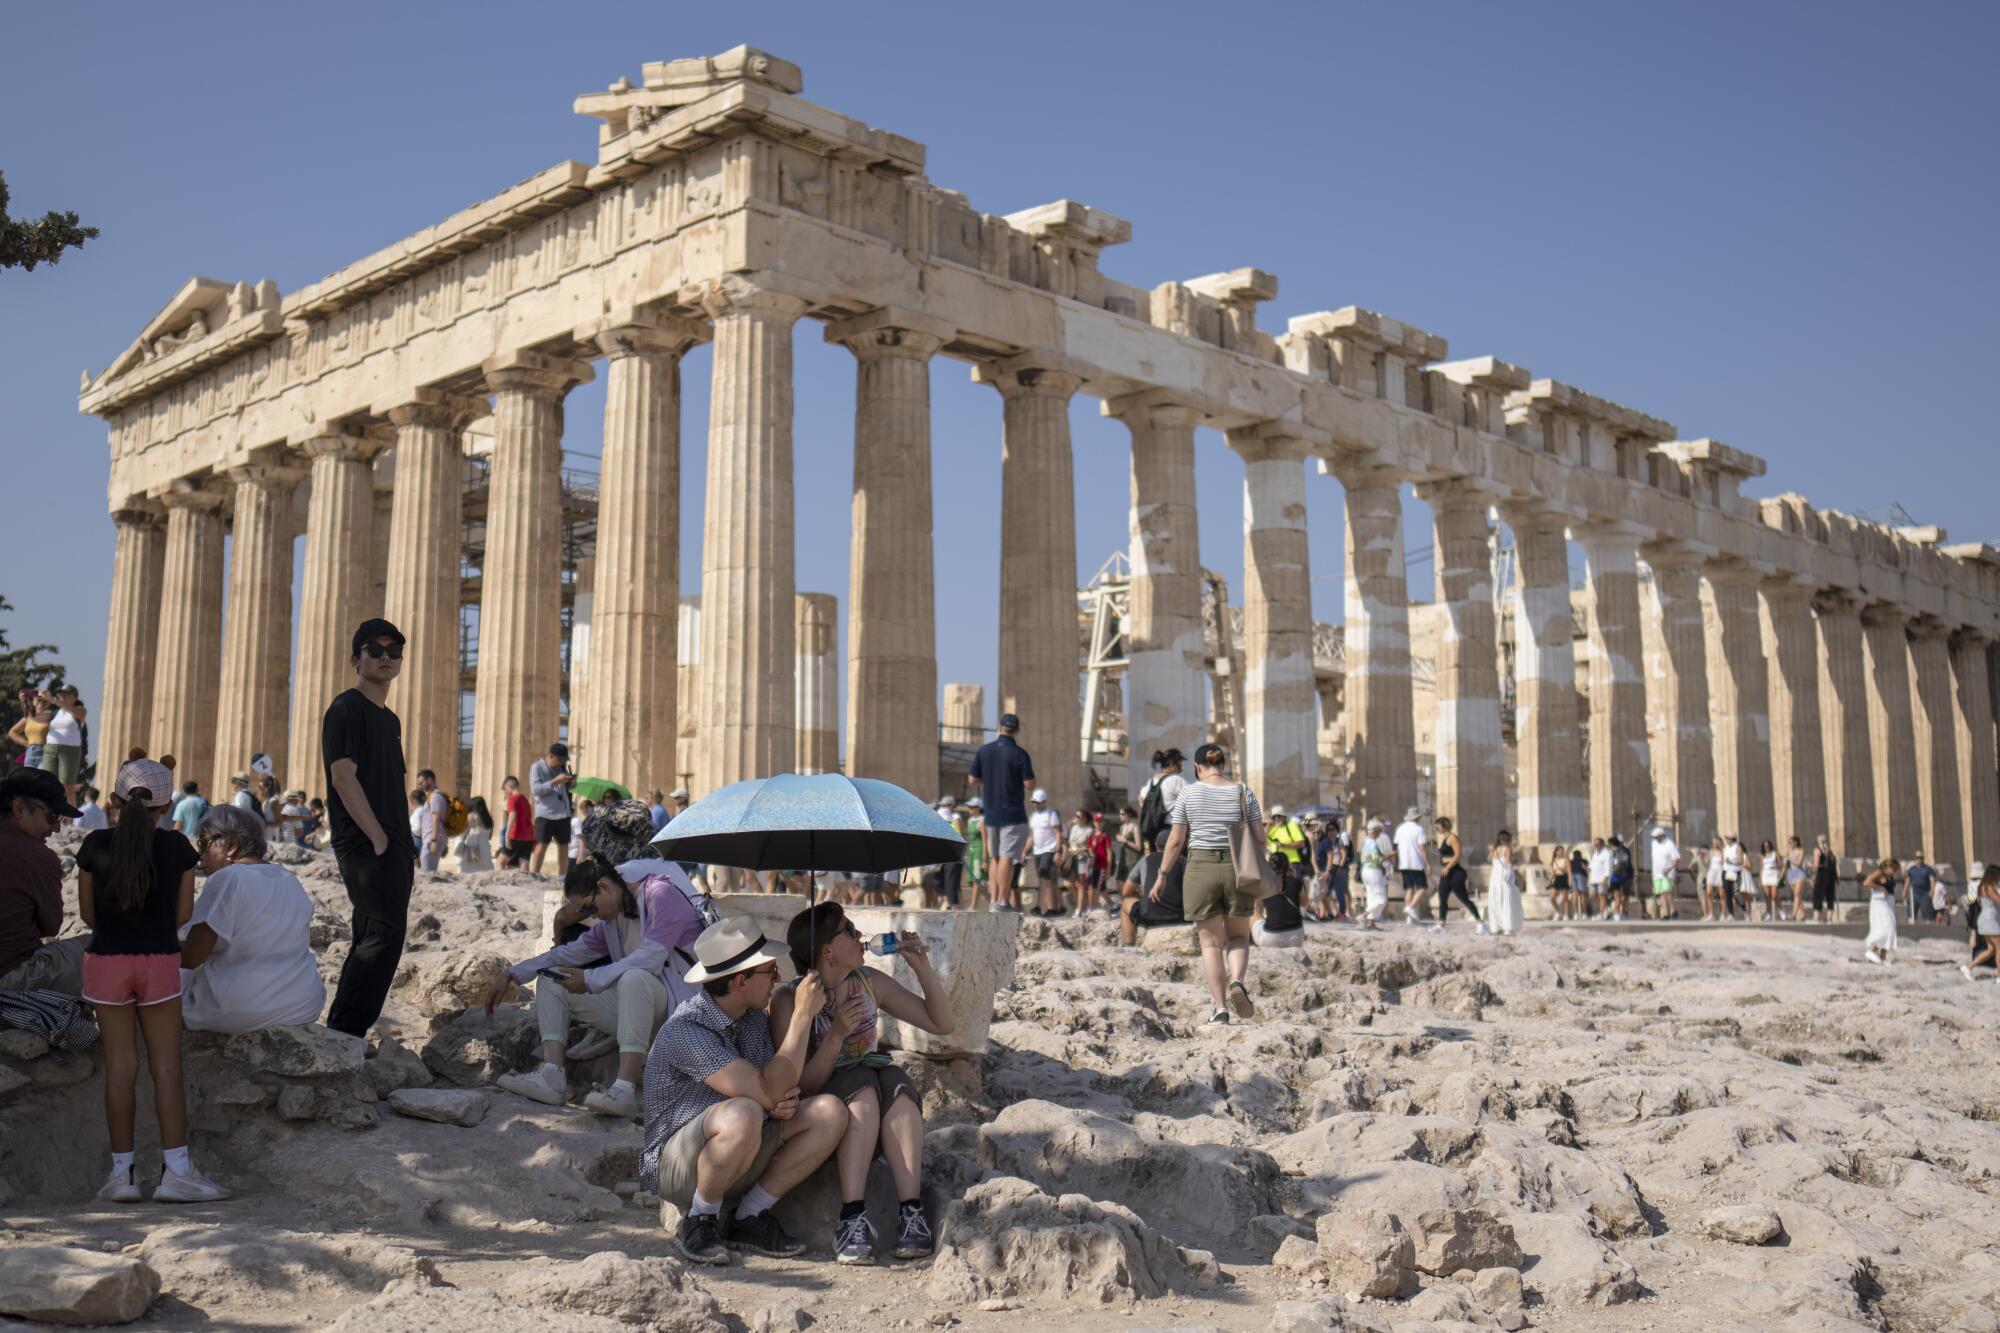 Tourists visiting the Acropolis of Athens gather around the Parthenon temple.